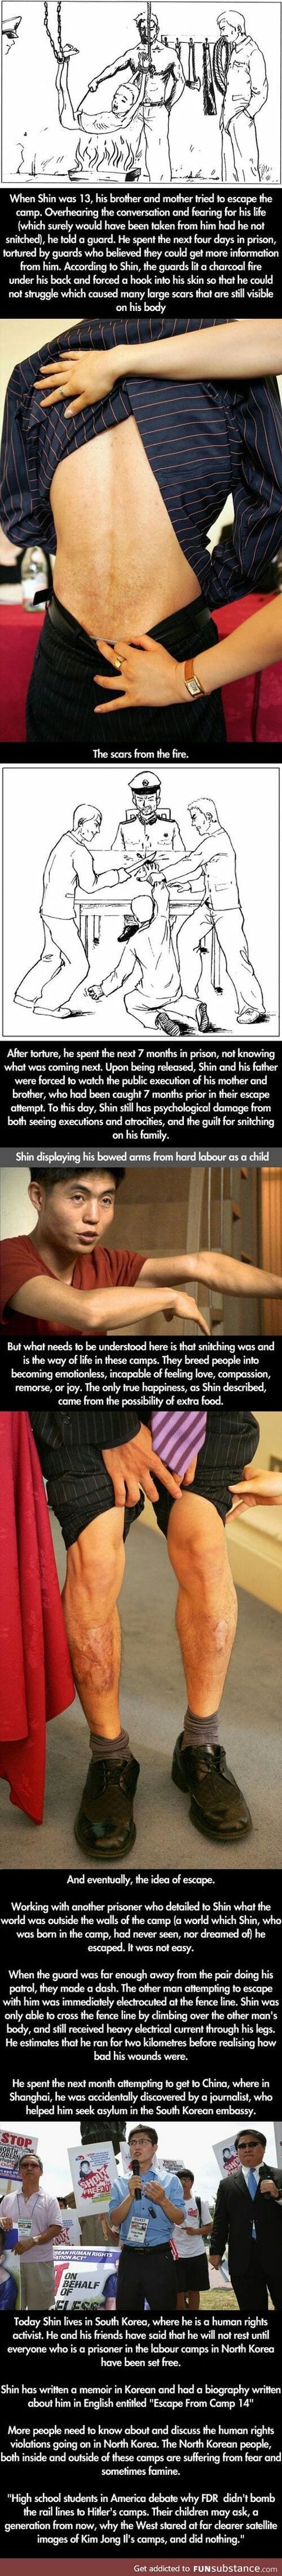 North Korean labor camp sirvivor